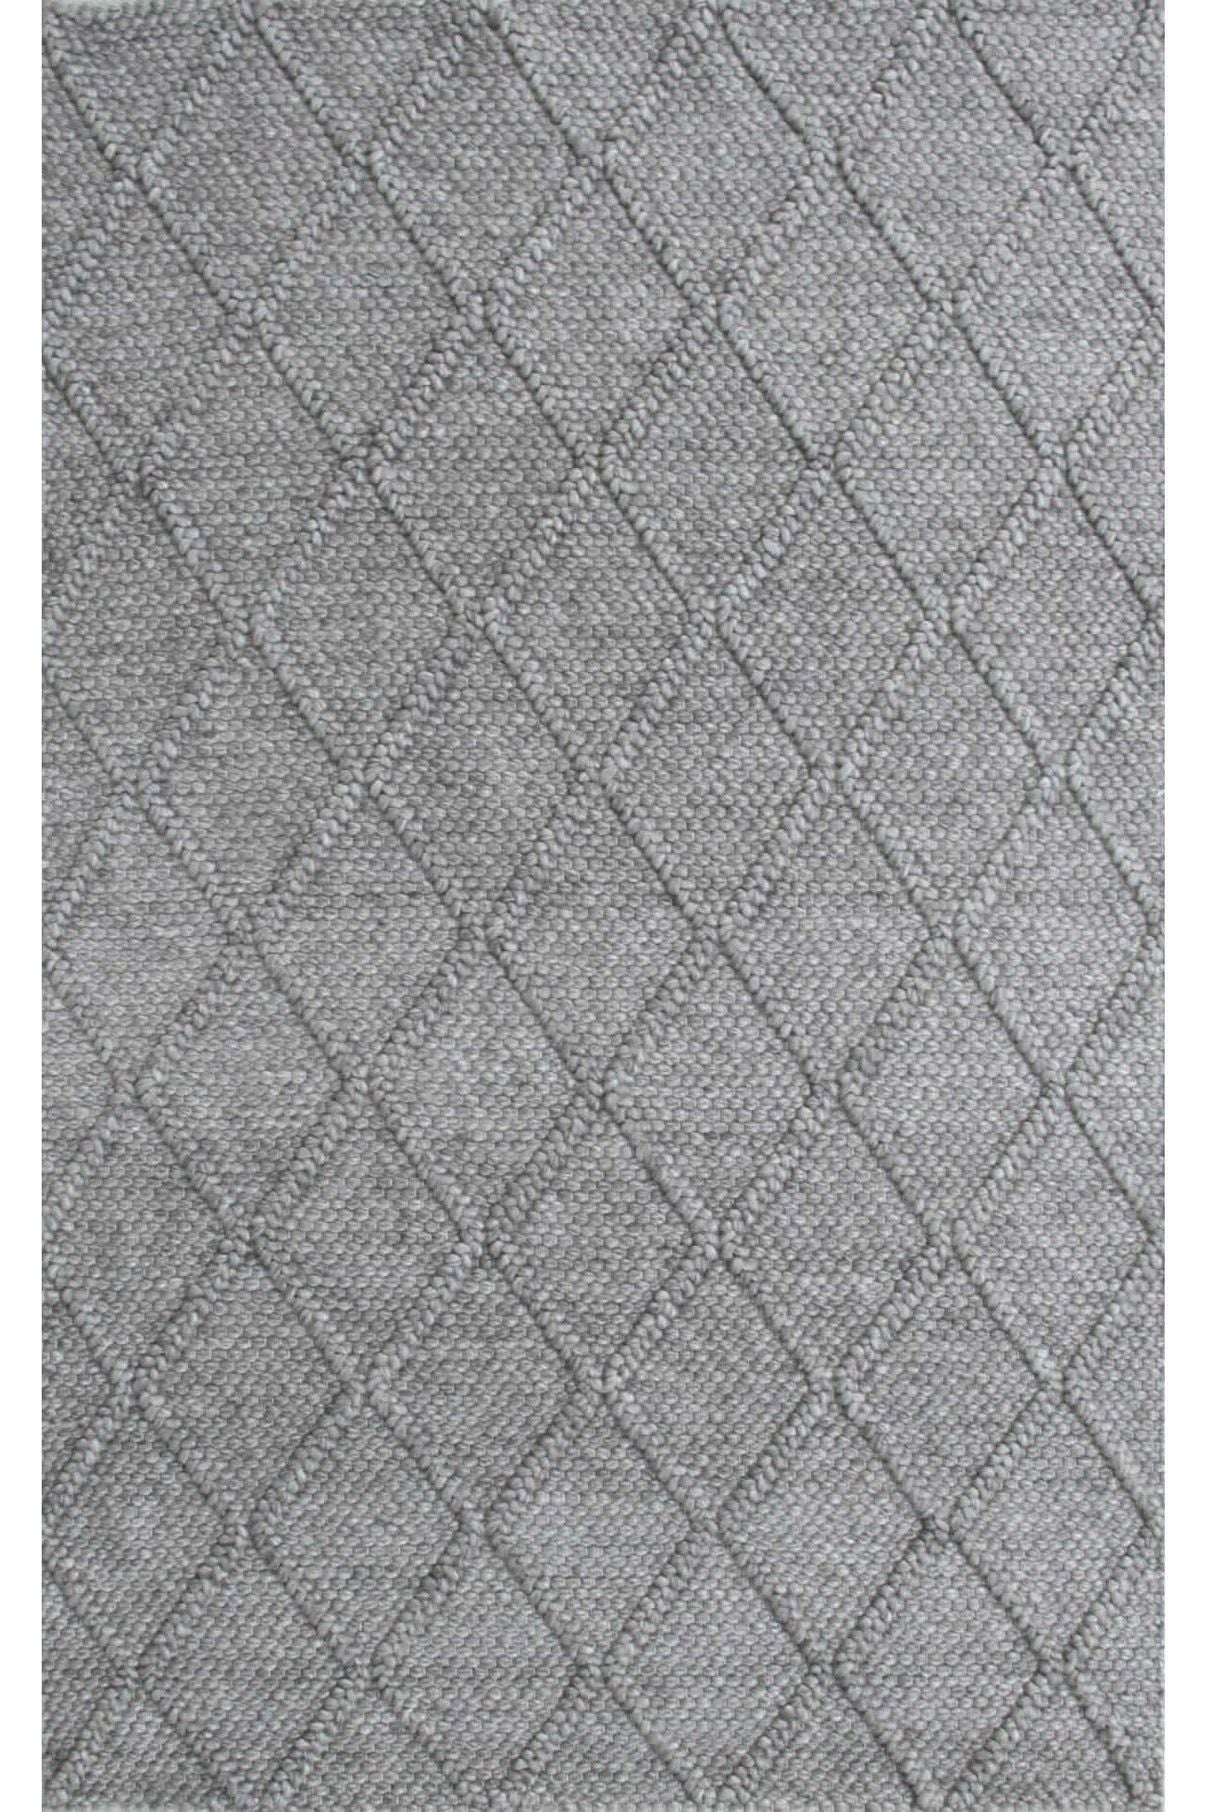 #Turkish_Carpets_Rugs# #Modern_Carpets# #Abrash_Carpets#Diamond Brown